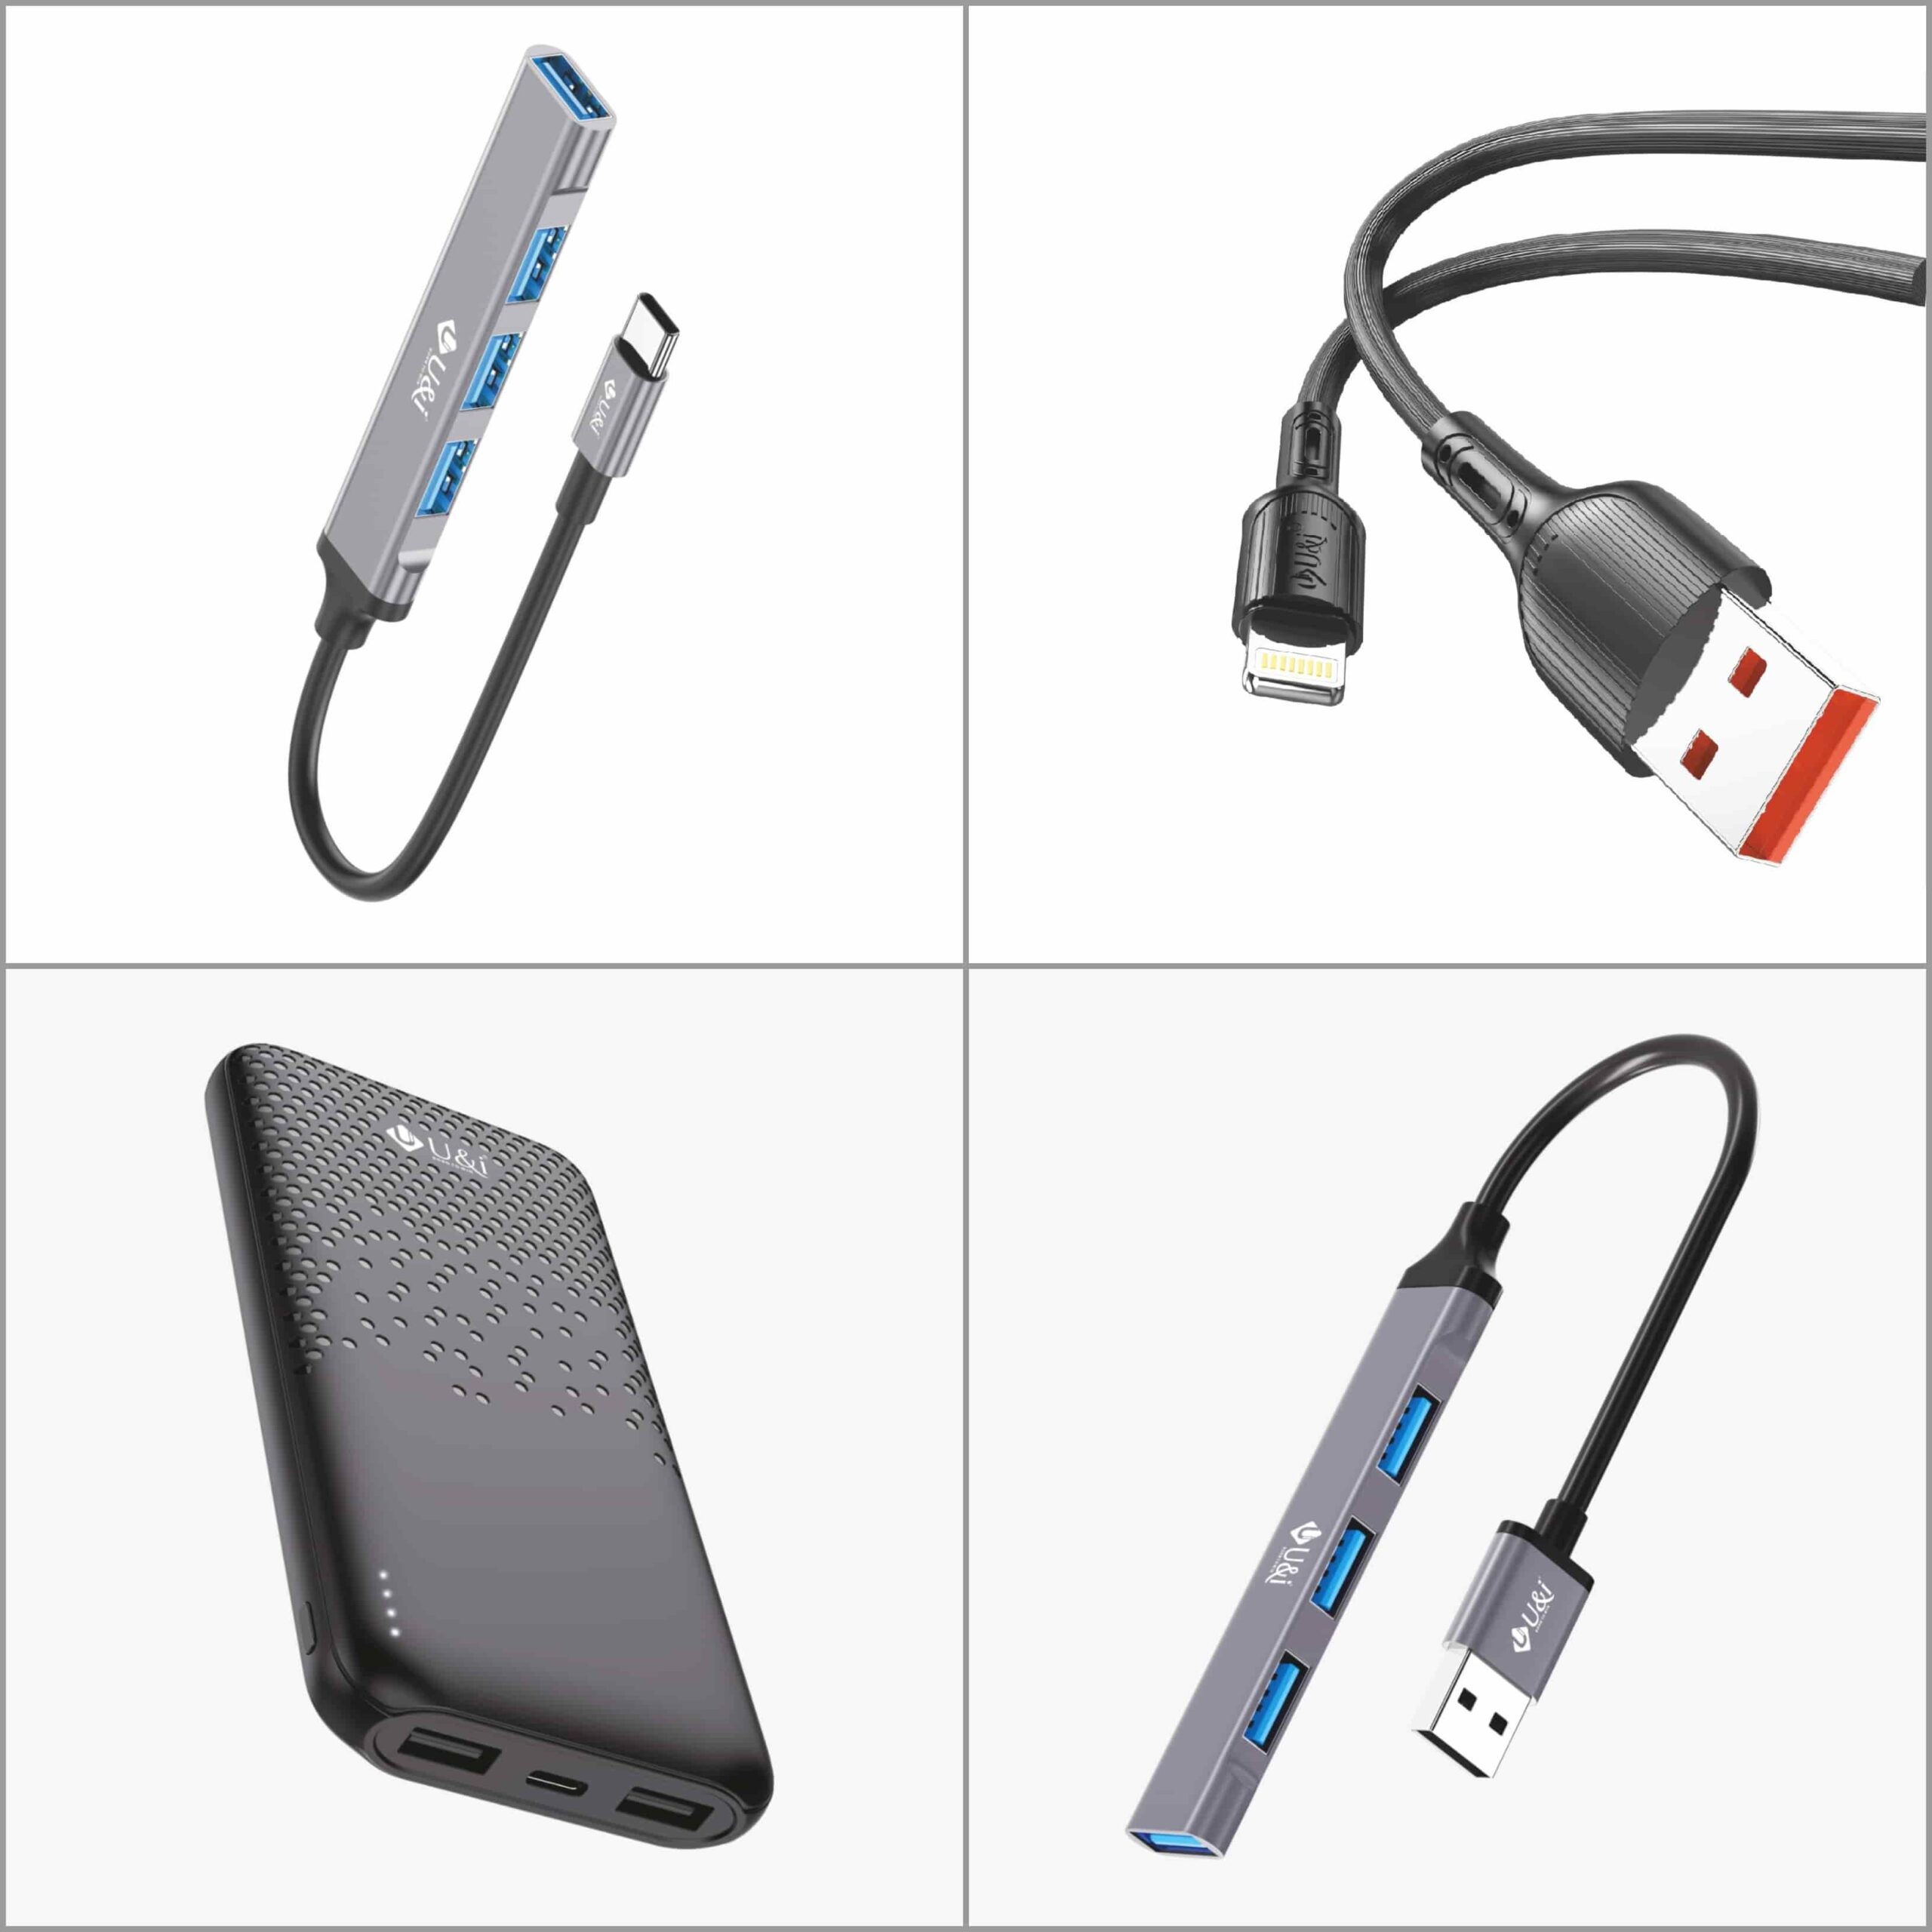 U&i Announces New USB Travel Accessories for Laptops & Smartphones